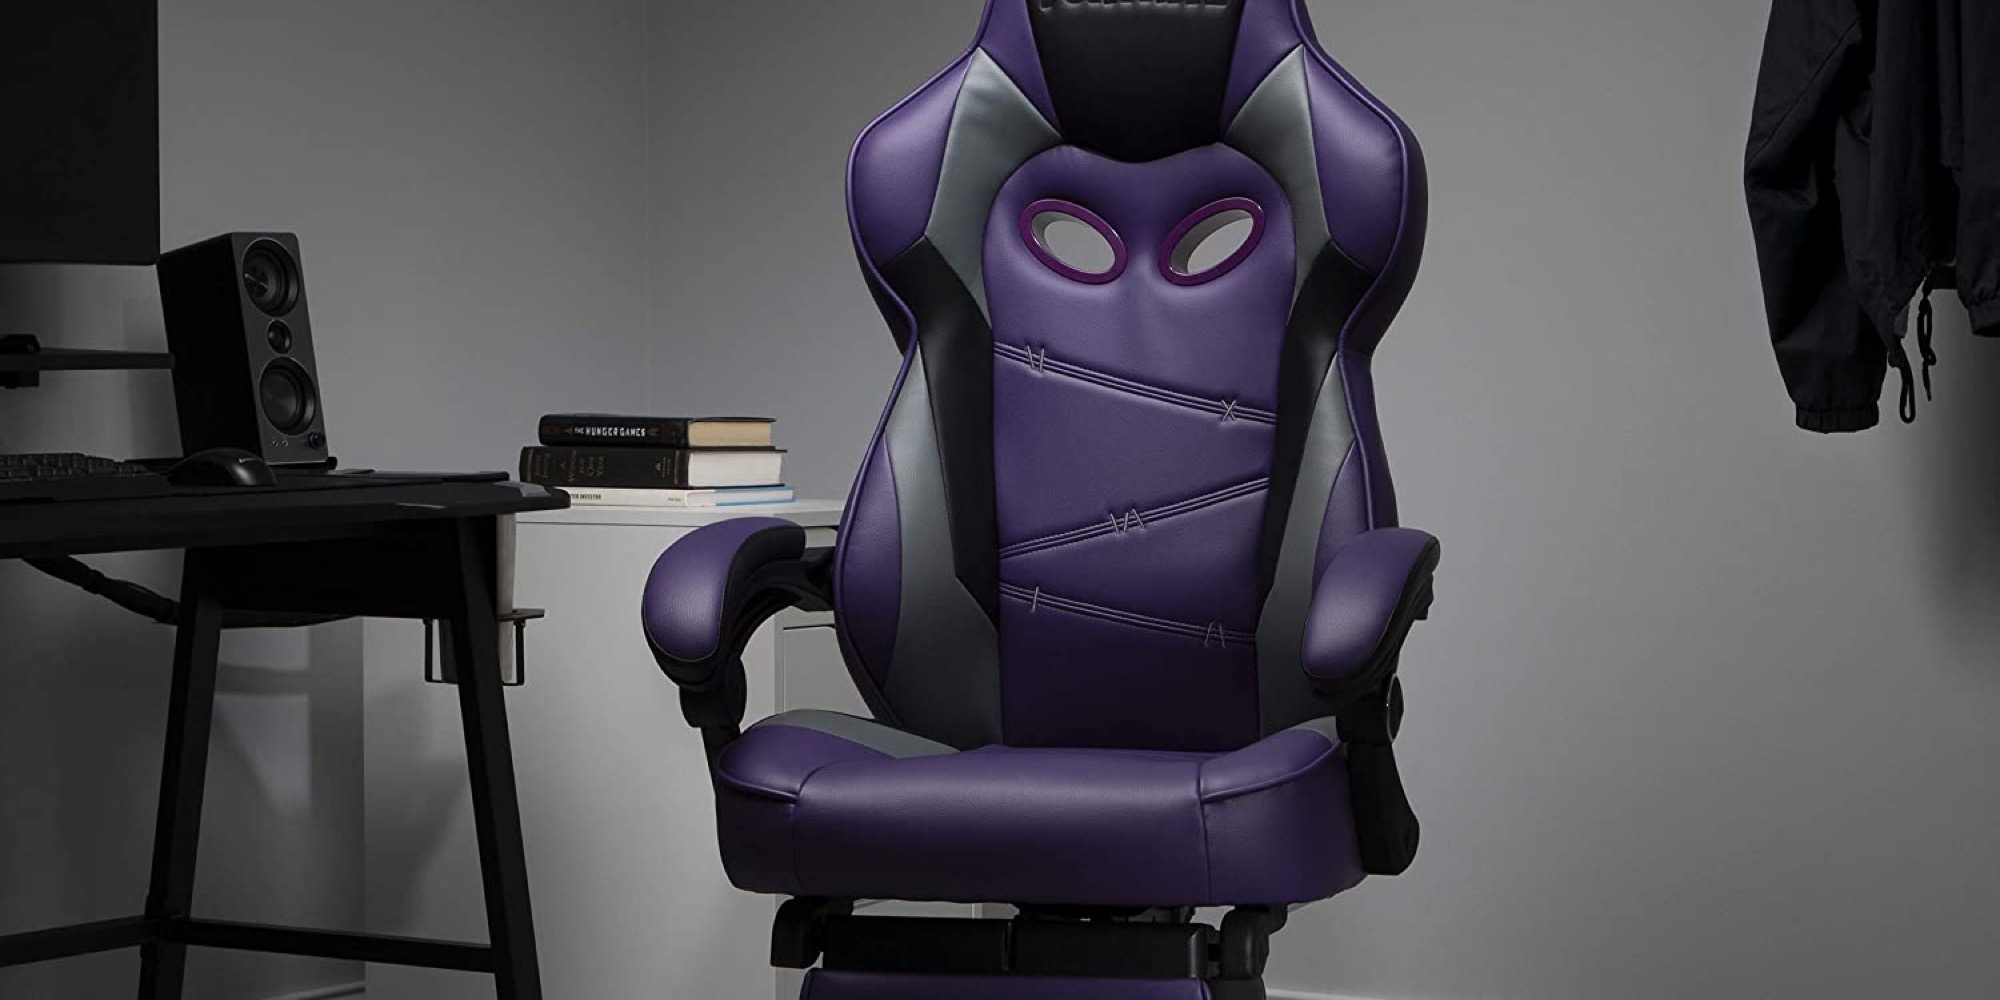 RESPAWN's reclinable RAVENXi Fortnite Gaming Chair hits